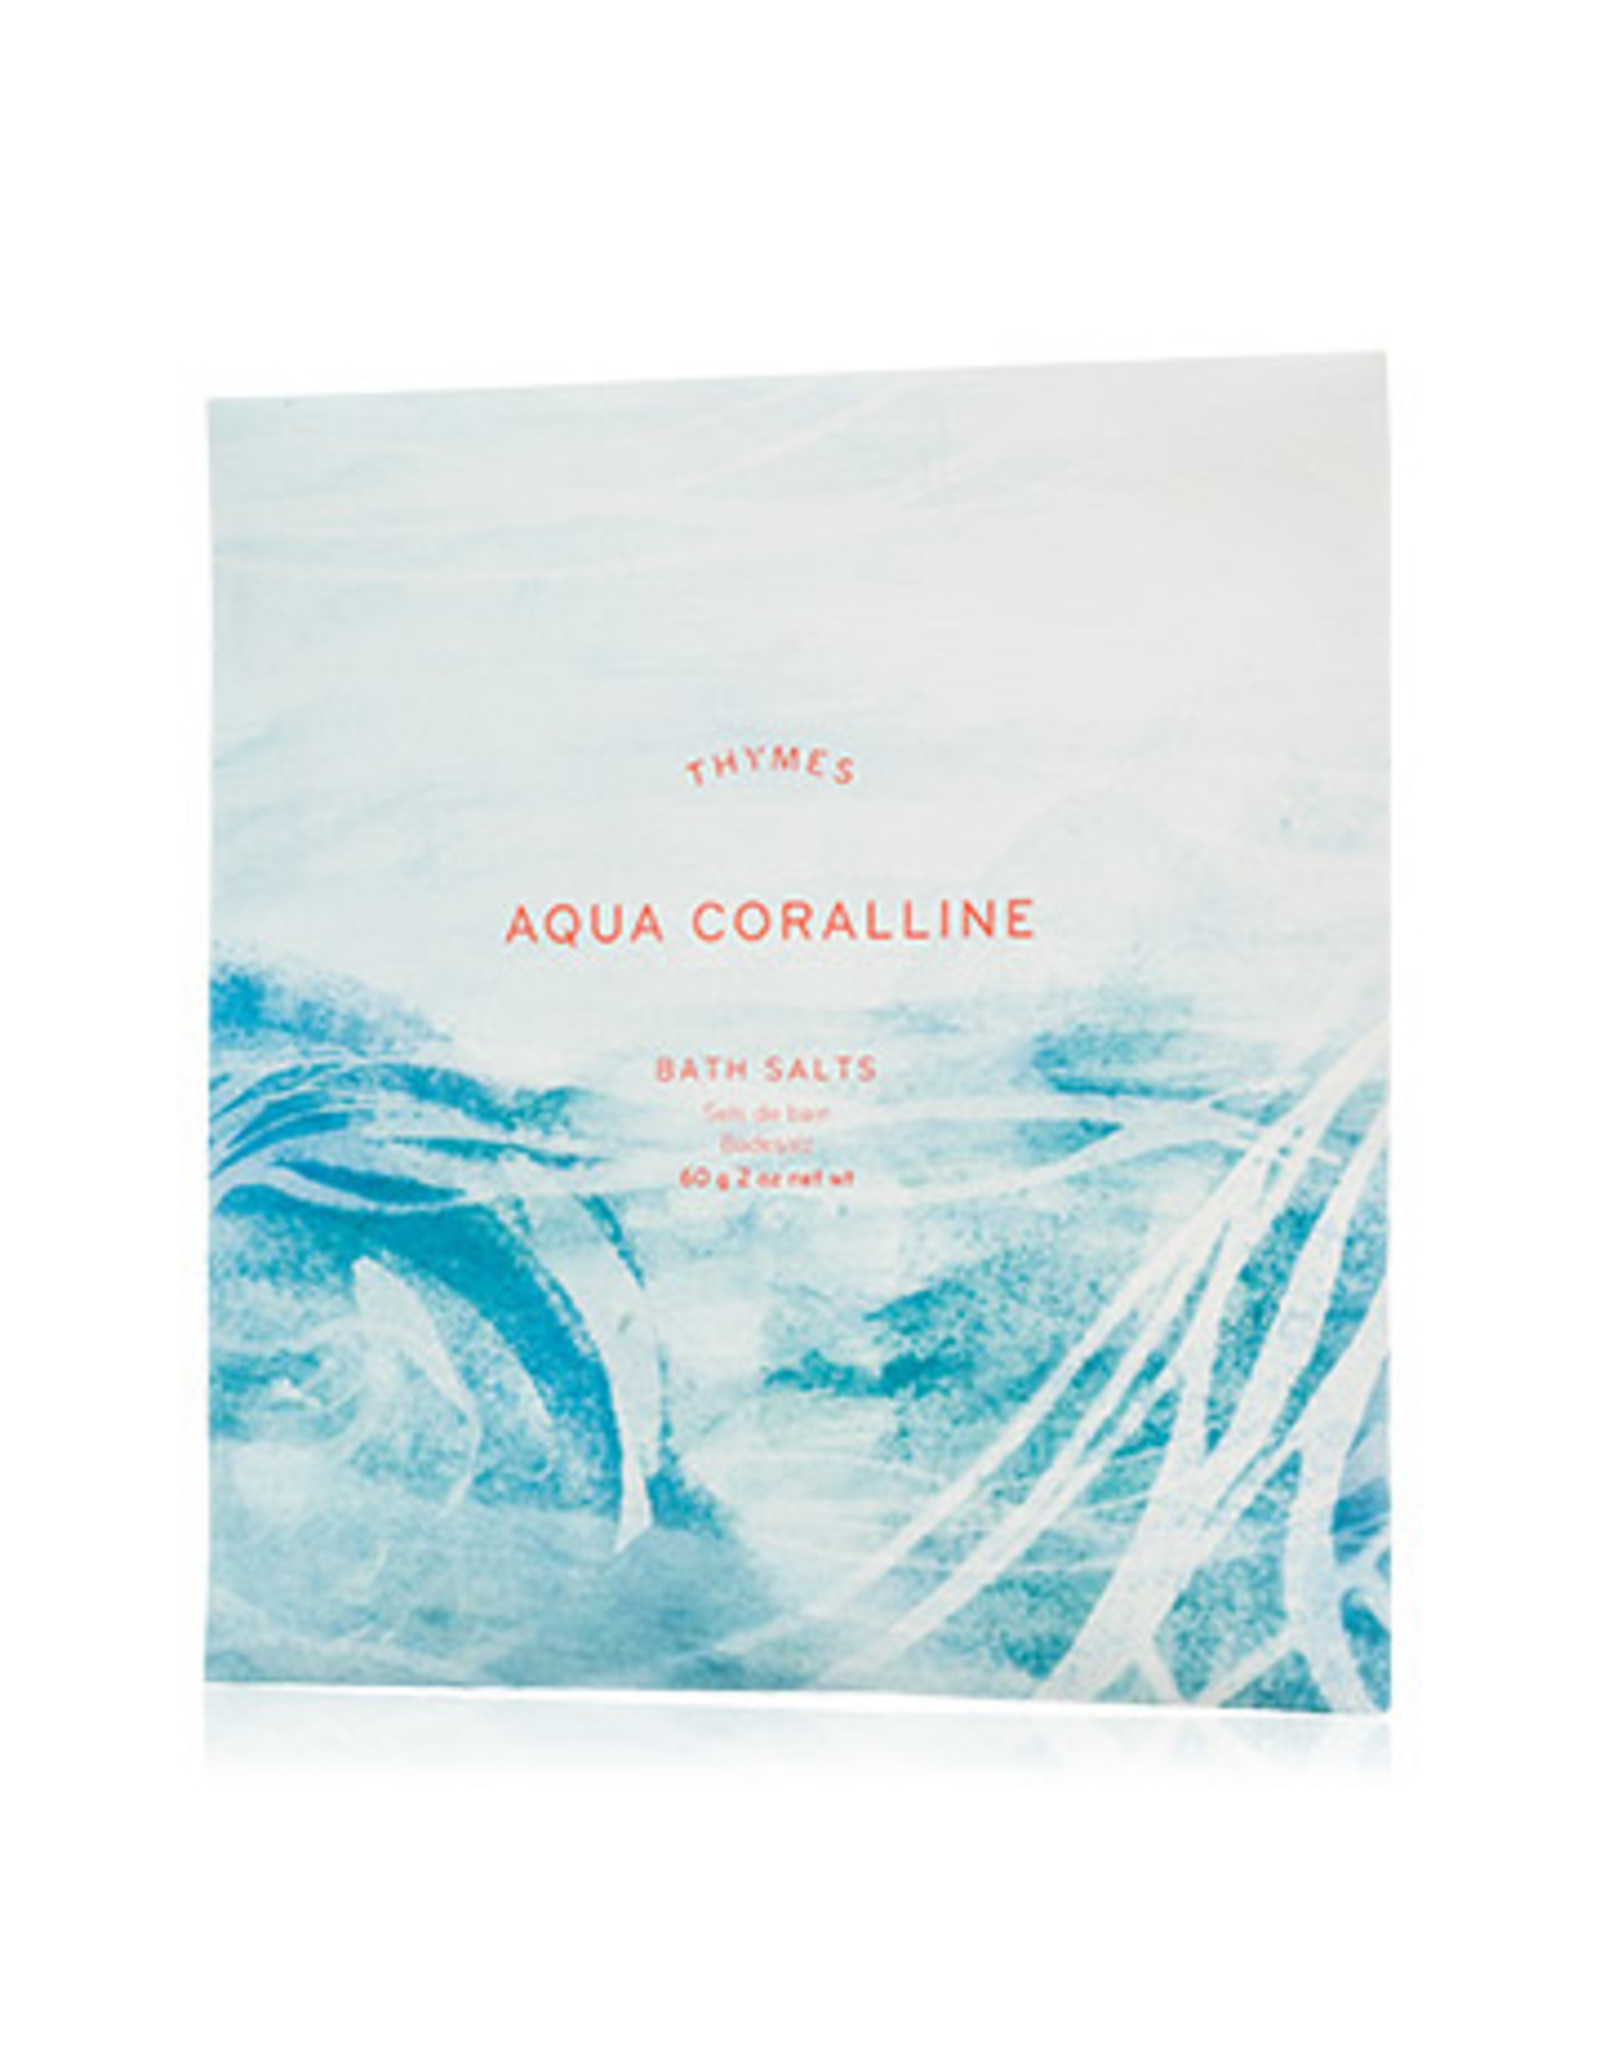 Thymes Aqua Coralline Bath Salts 2 oz